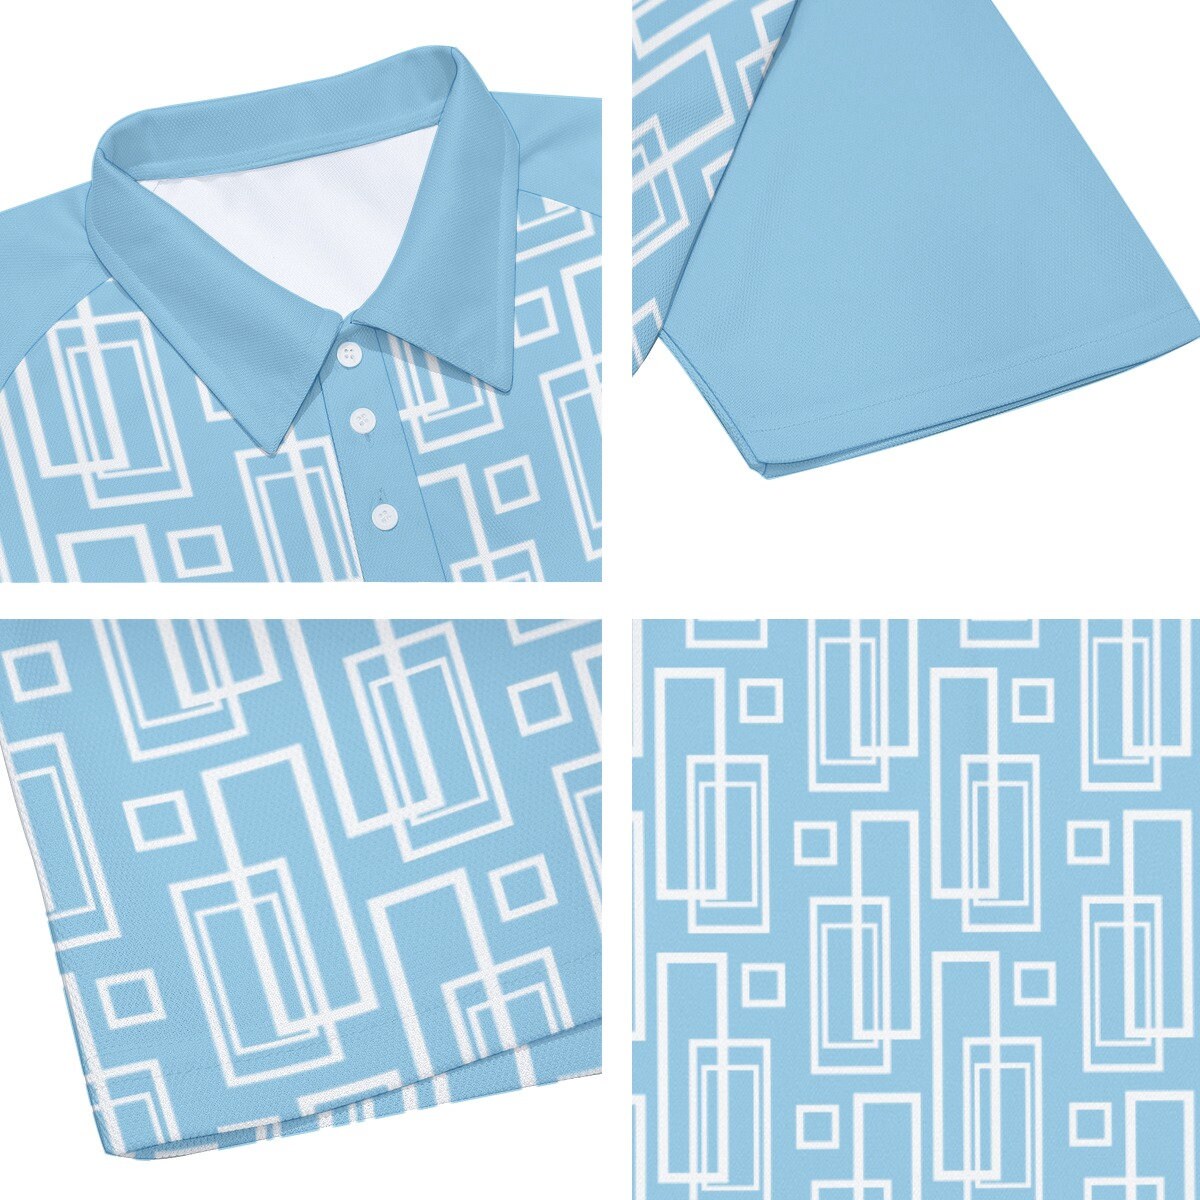 Polo, Polo Homme, Chemise Bleue Homme. Chemise de style vintage, chemise vintage pour hommes, polo bleu, chemise tricotée pour hommes, chemise des années 60 70